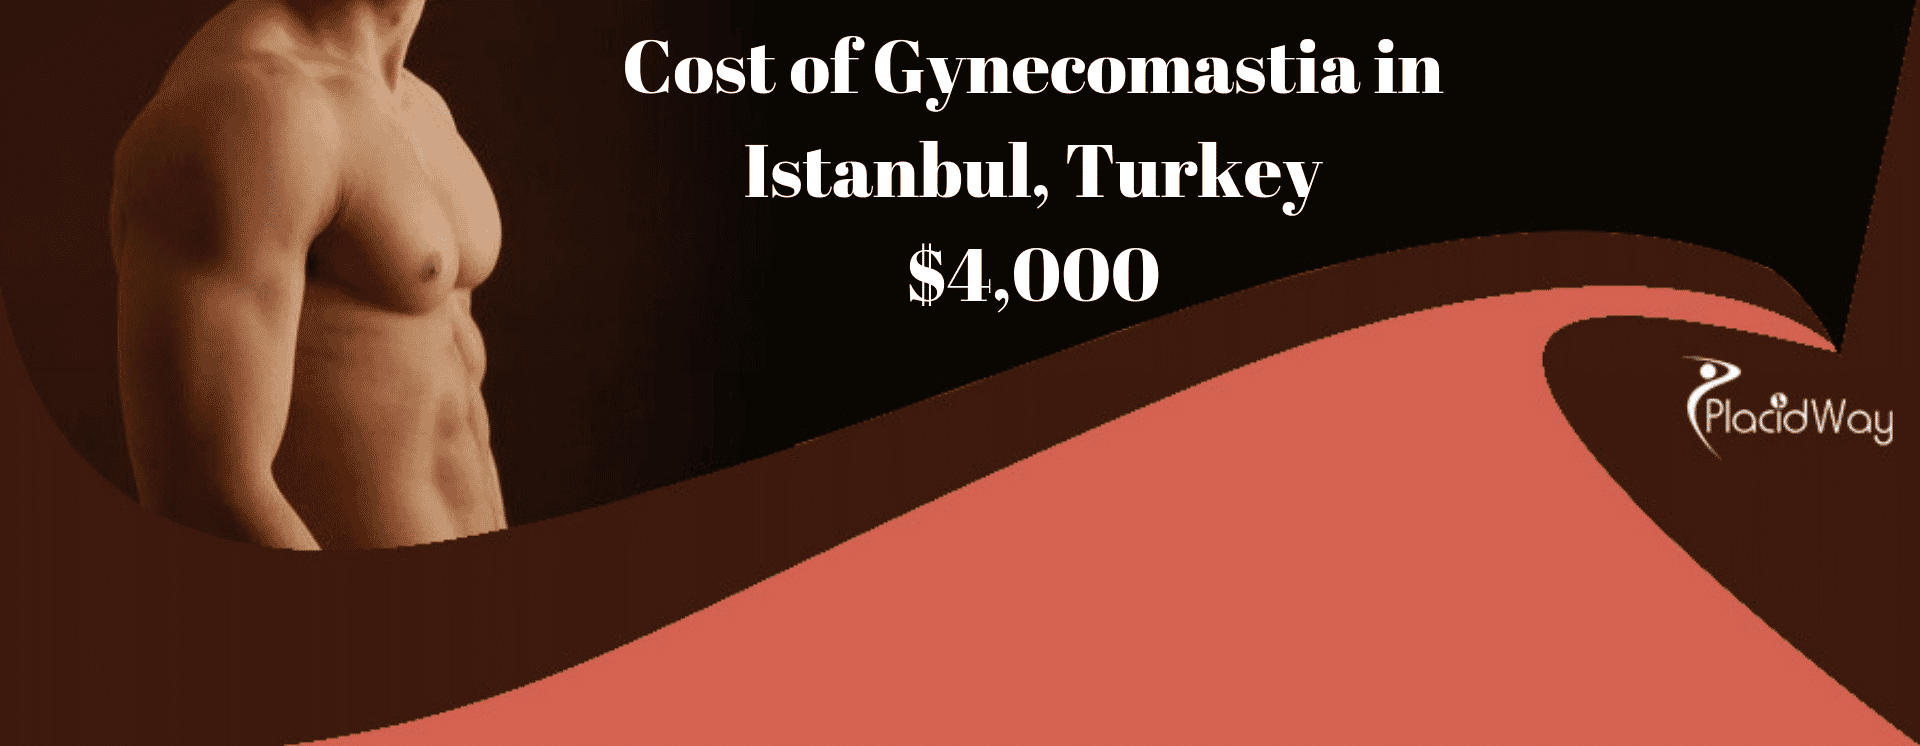 Cost of Gynecomastia in Istanbul, Turkey